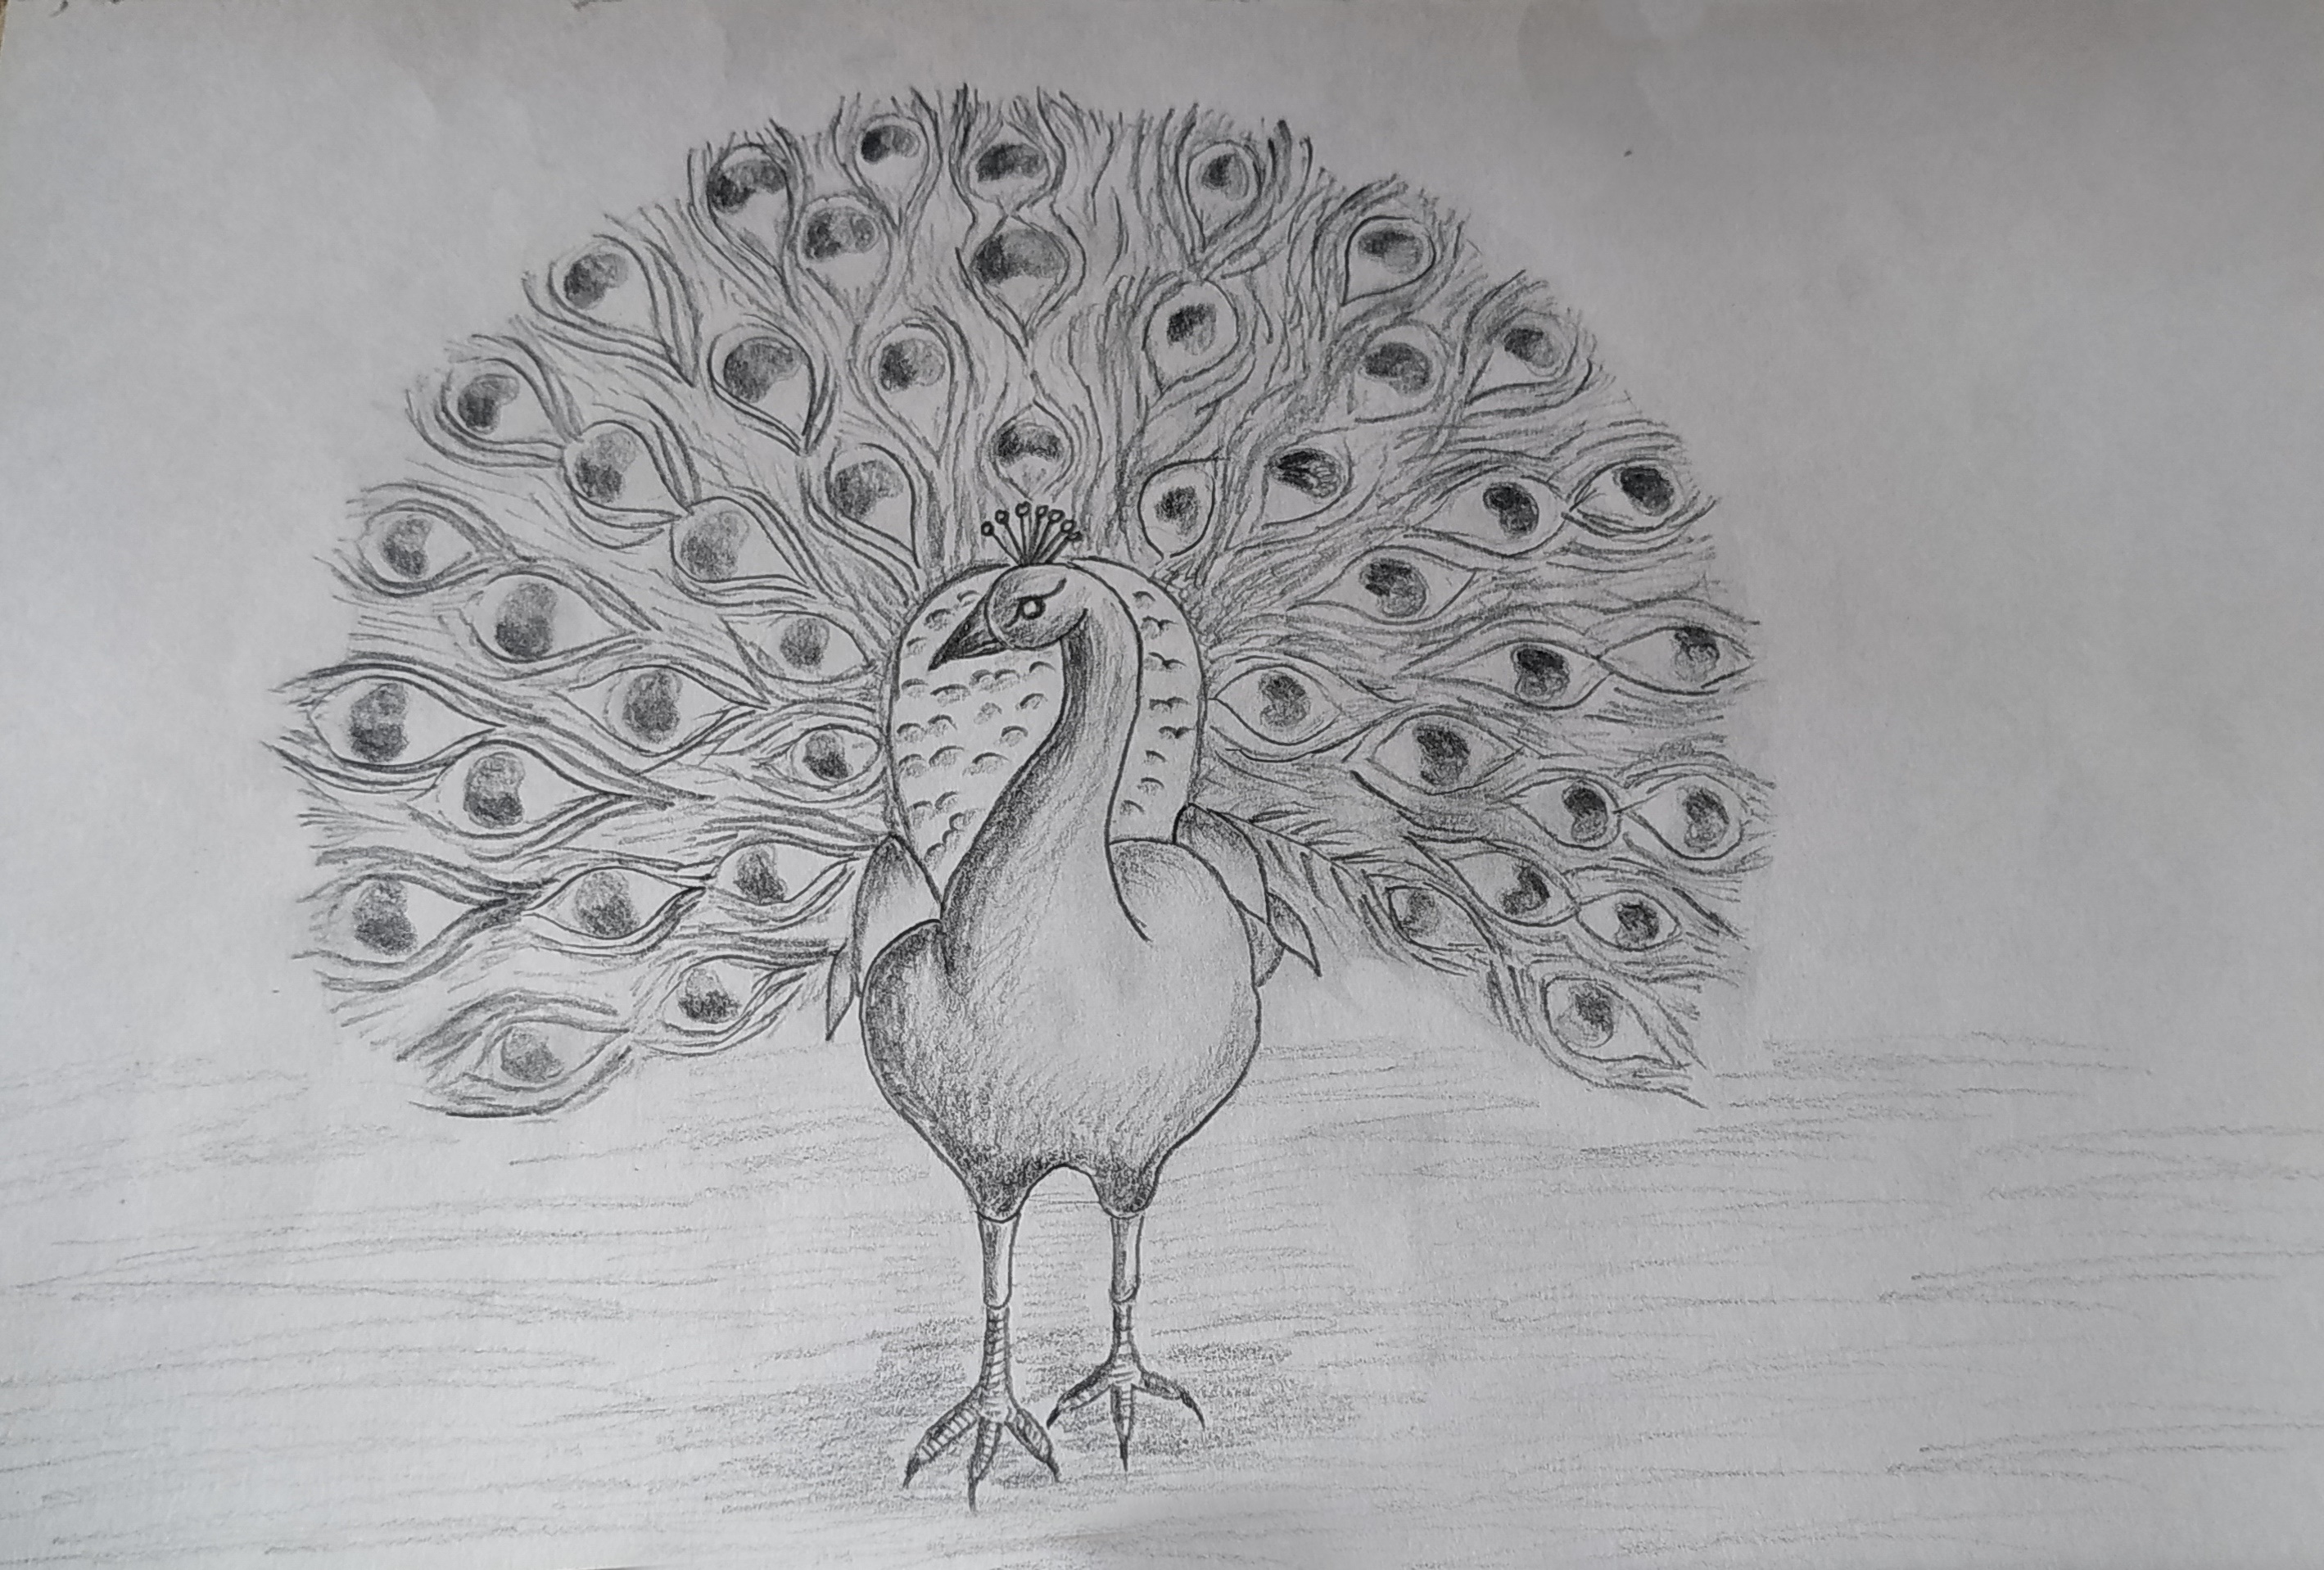 Peacock Design Pencil Sketch - Peacock Sketch | Bodenswasuee